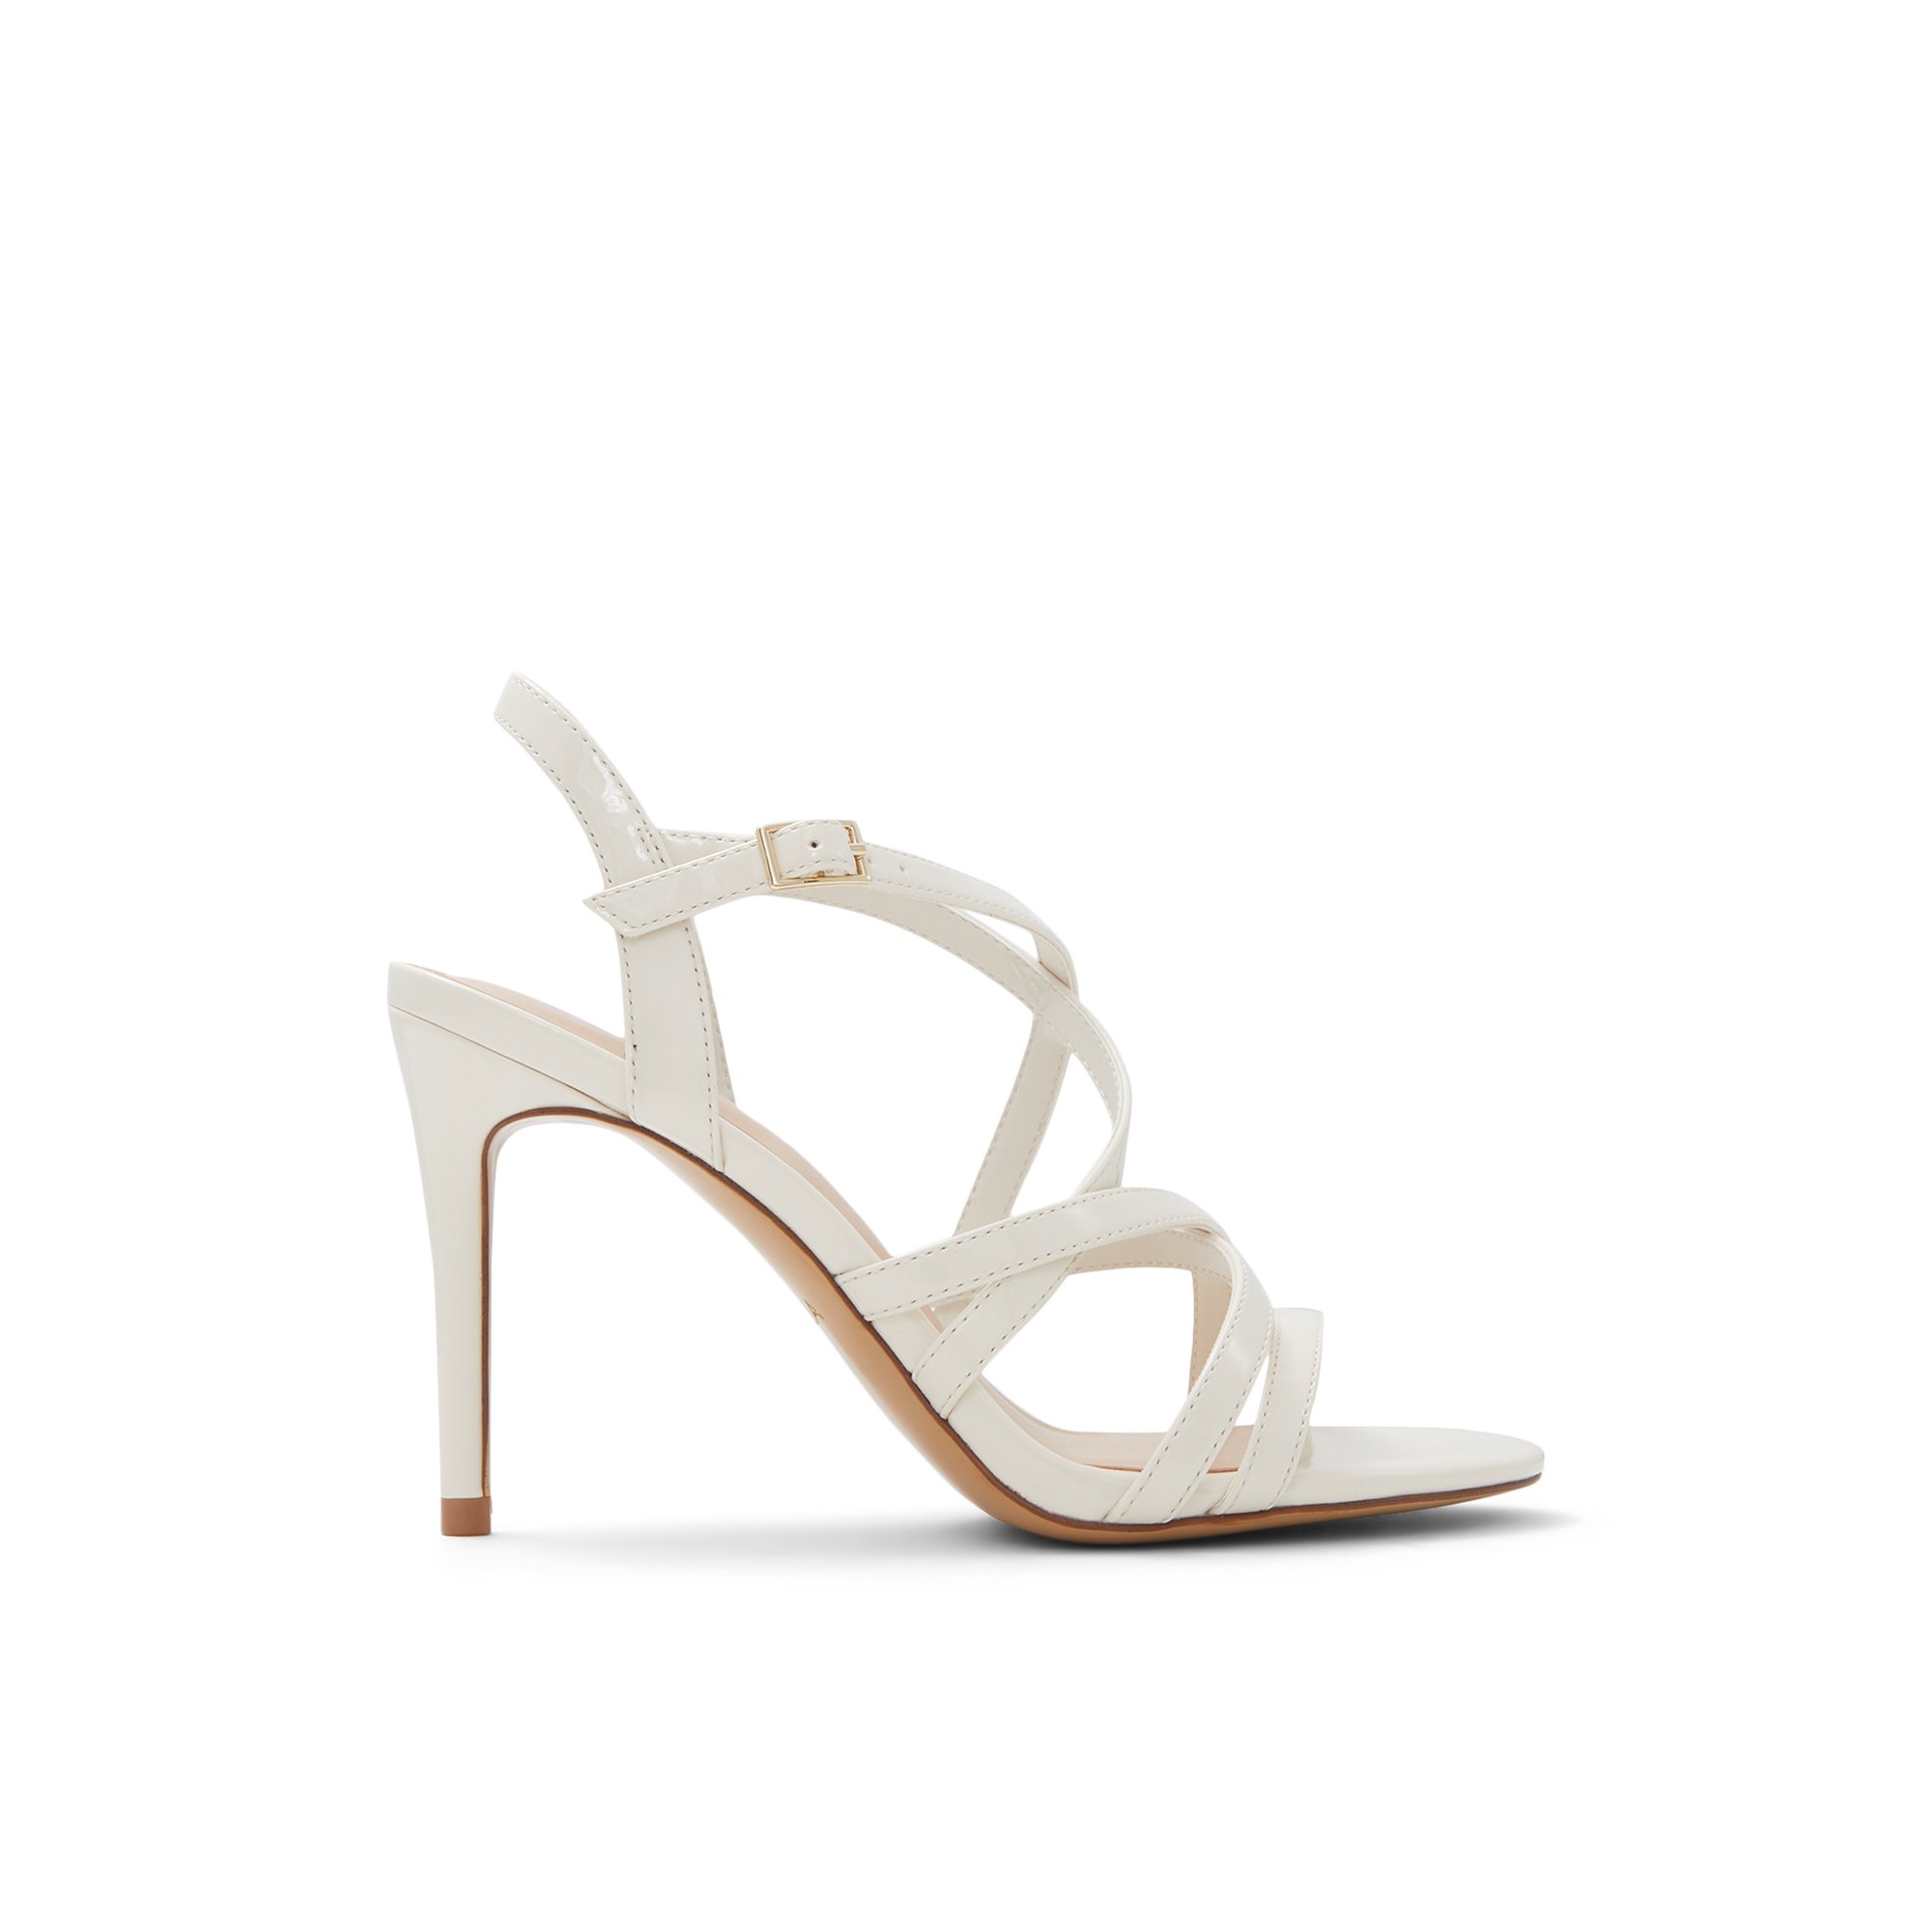 ALDO Katiee - Women's Strappy Sandal Sandals - White